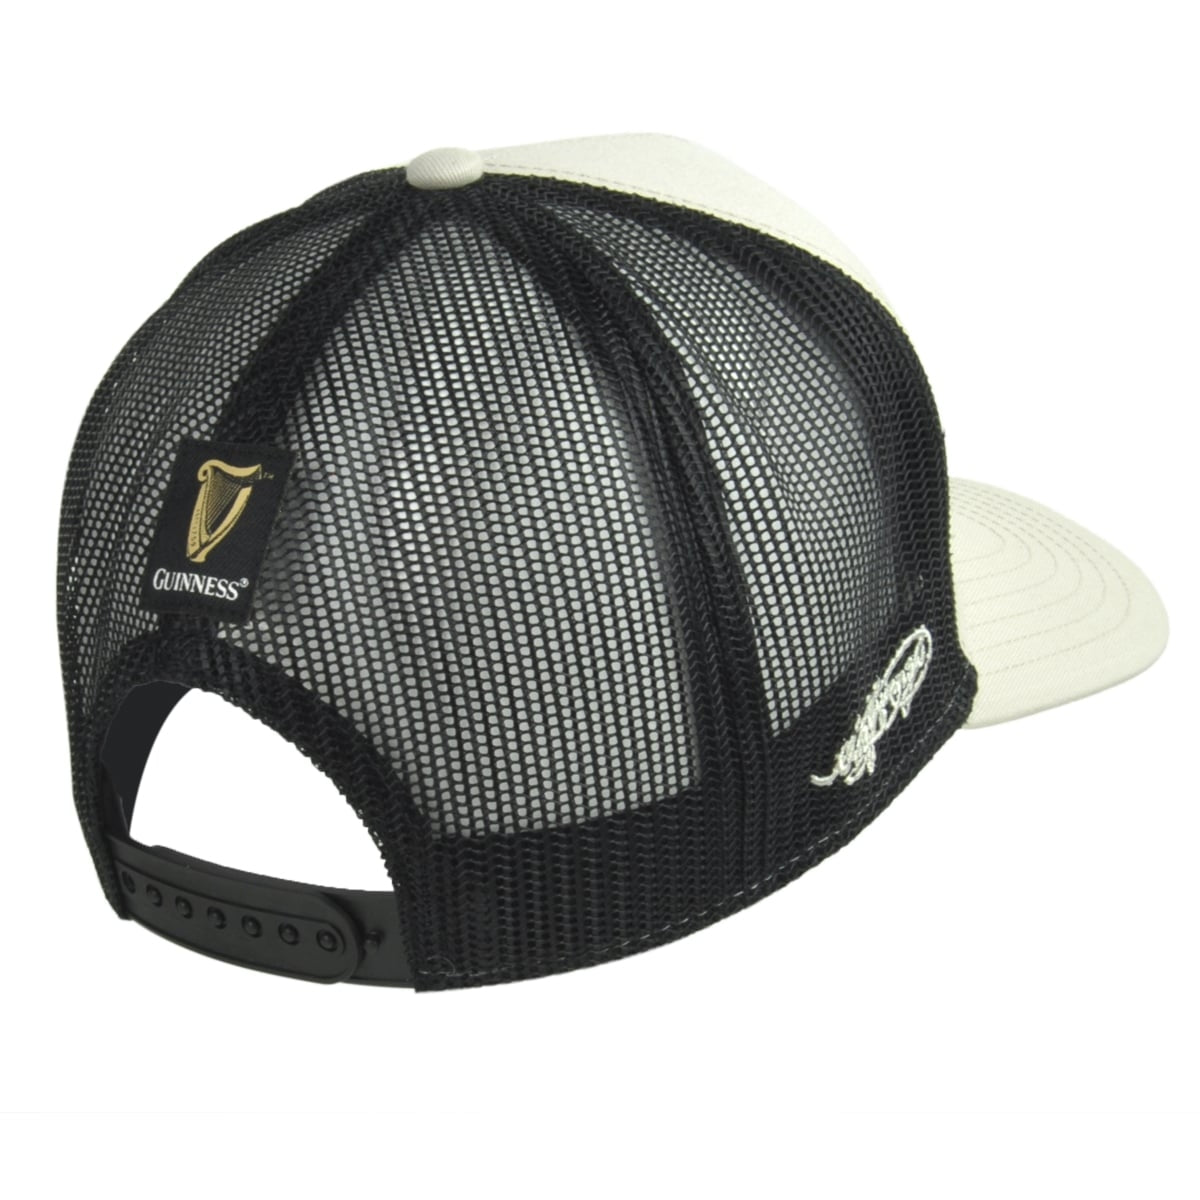 A black baseball hat with a Guinness Premium Beige & Black Harp Hat logo on it.